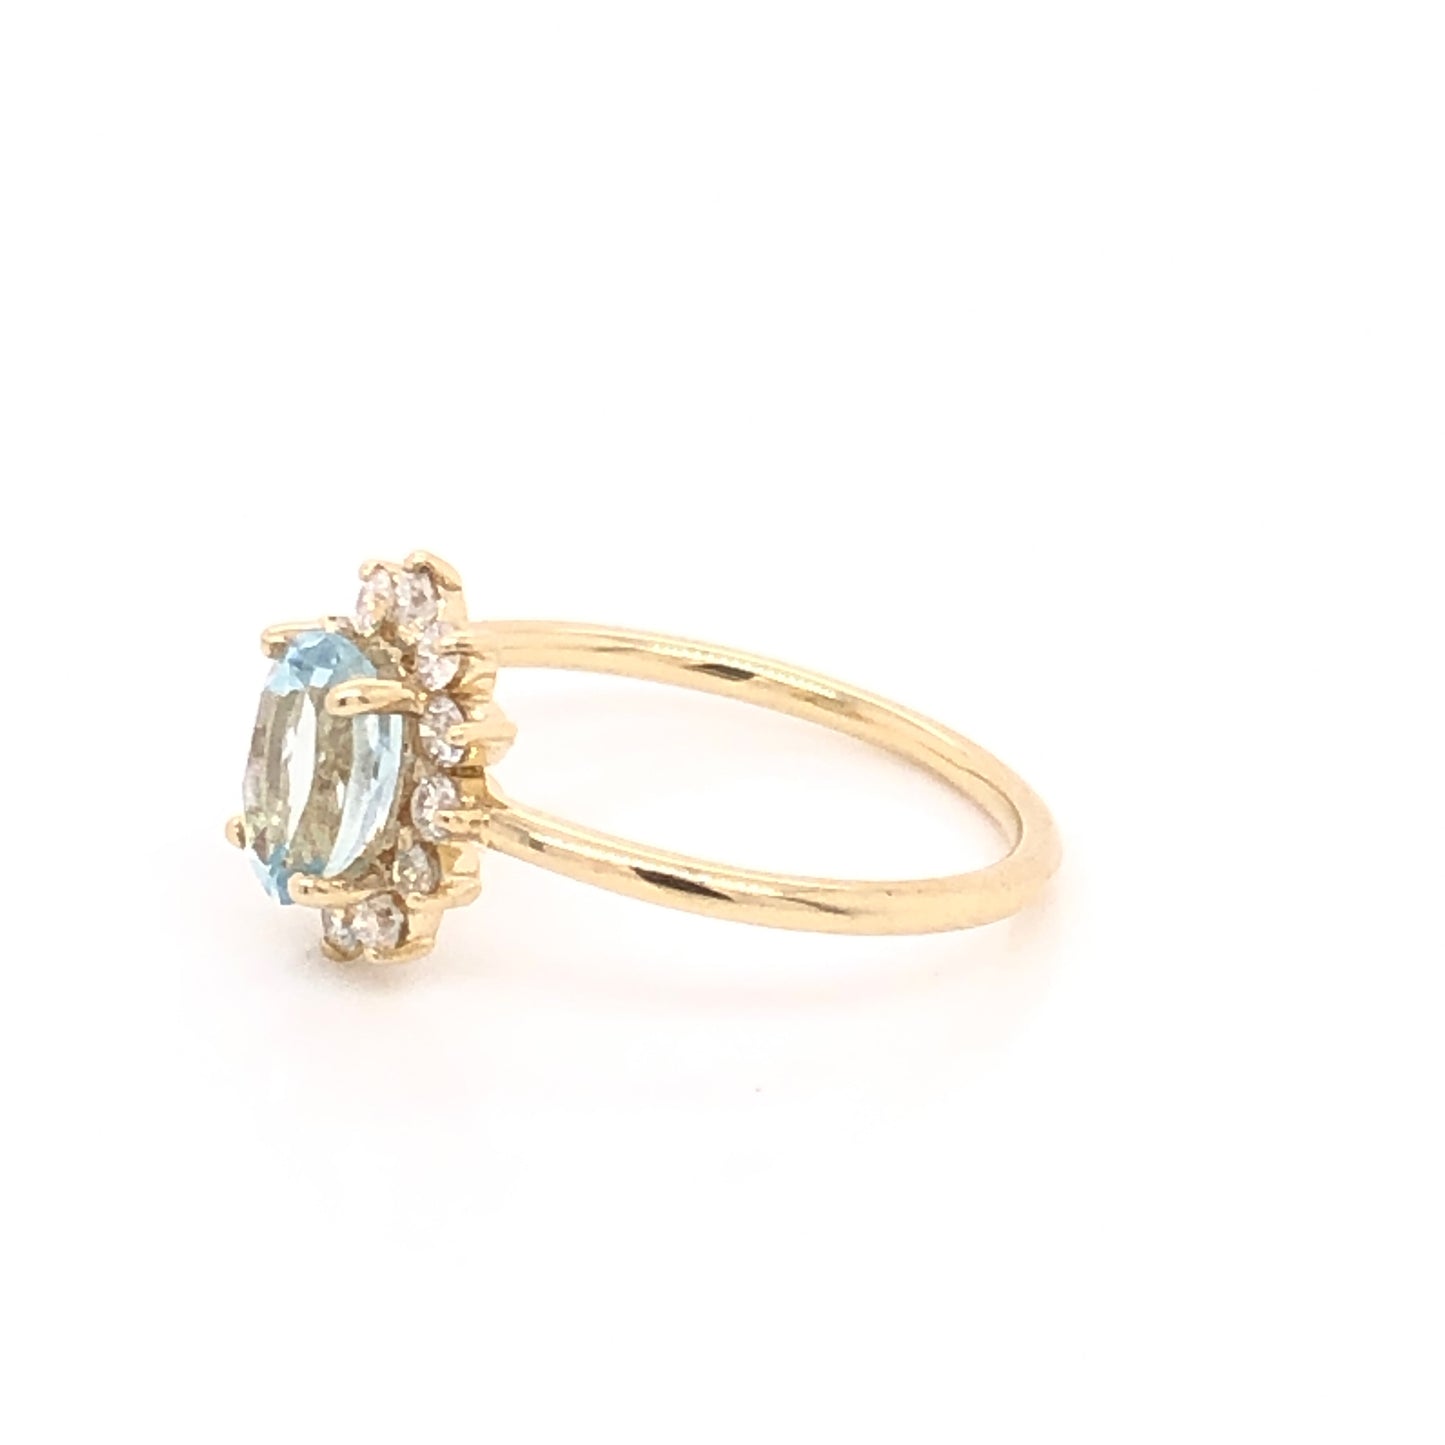 Aquamarine Ring with Diamond Halo